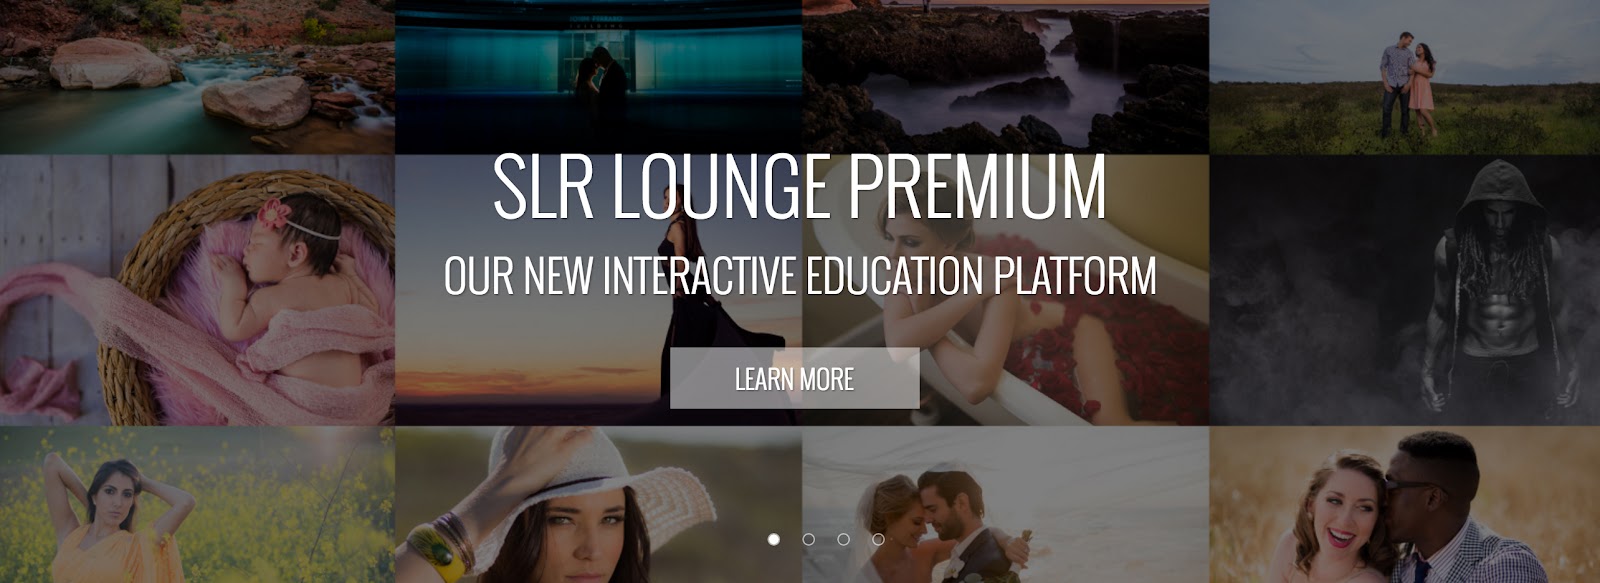 SLR Lounge premium